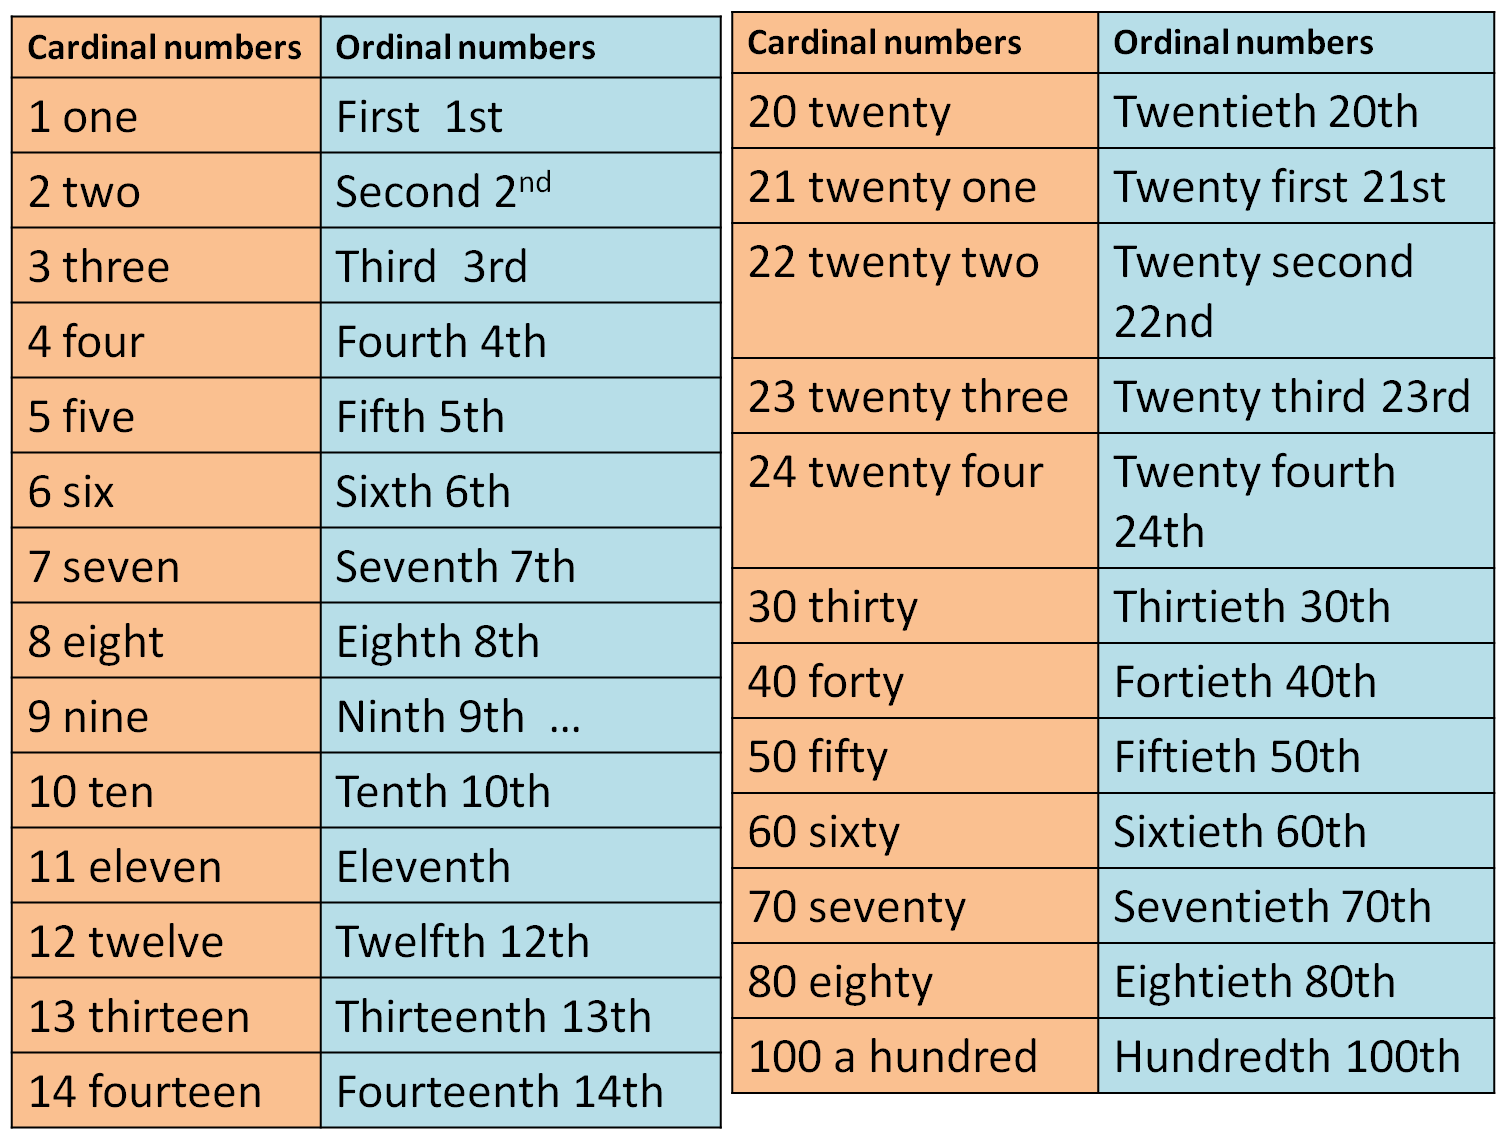 Как будет тысяча на английском. Месяца на английском языке с транскрипцией. Числительные на английском. Ordinal numbers таблица. Cardinal and Ordinal numbers.